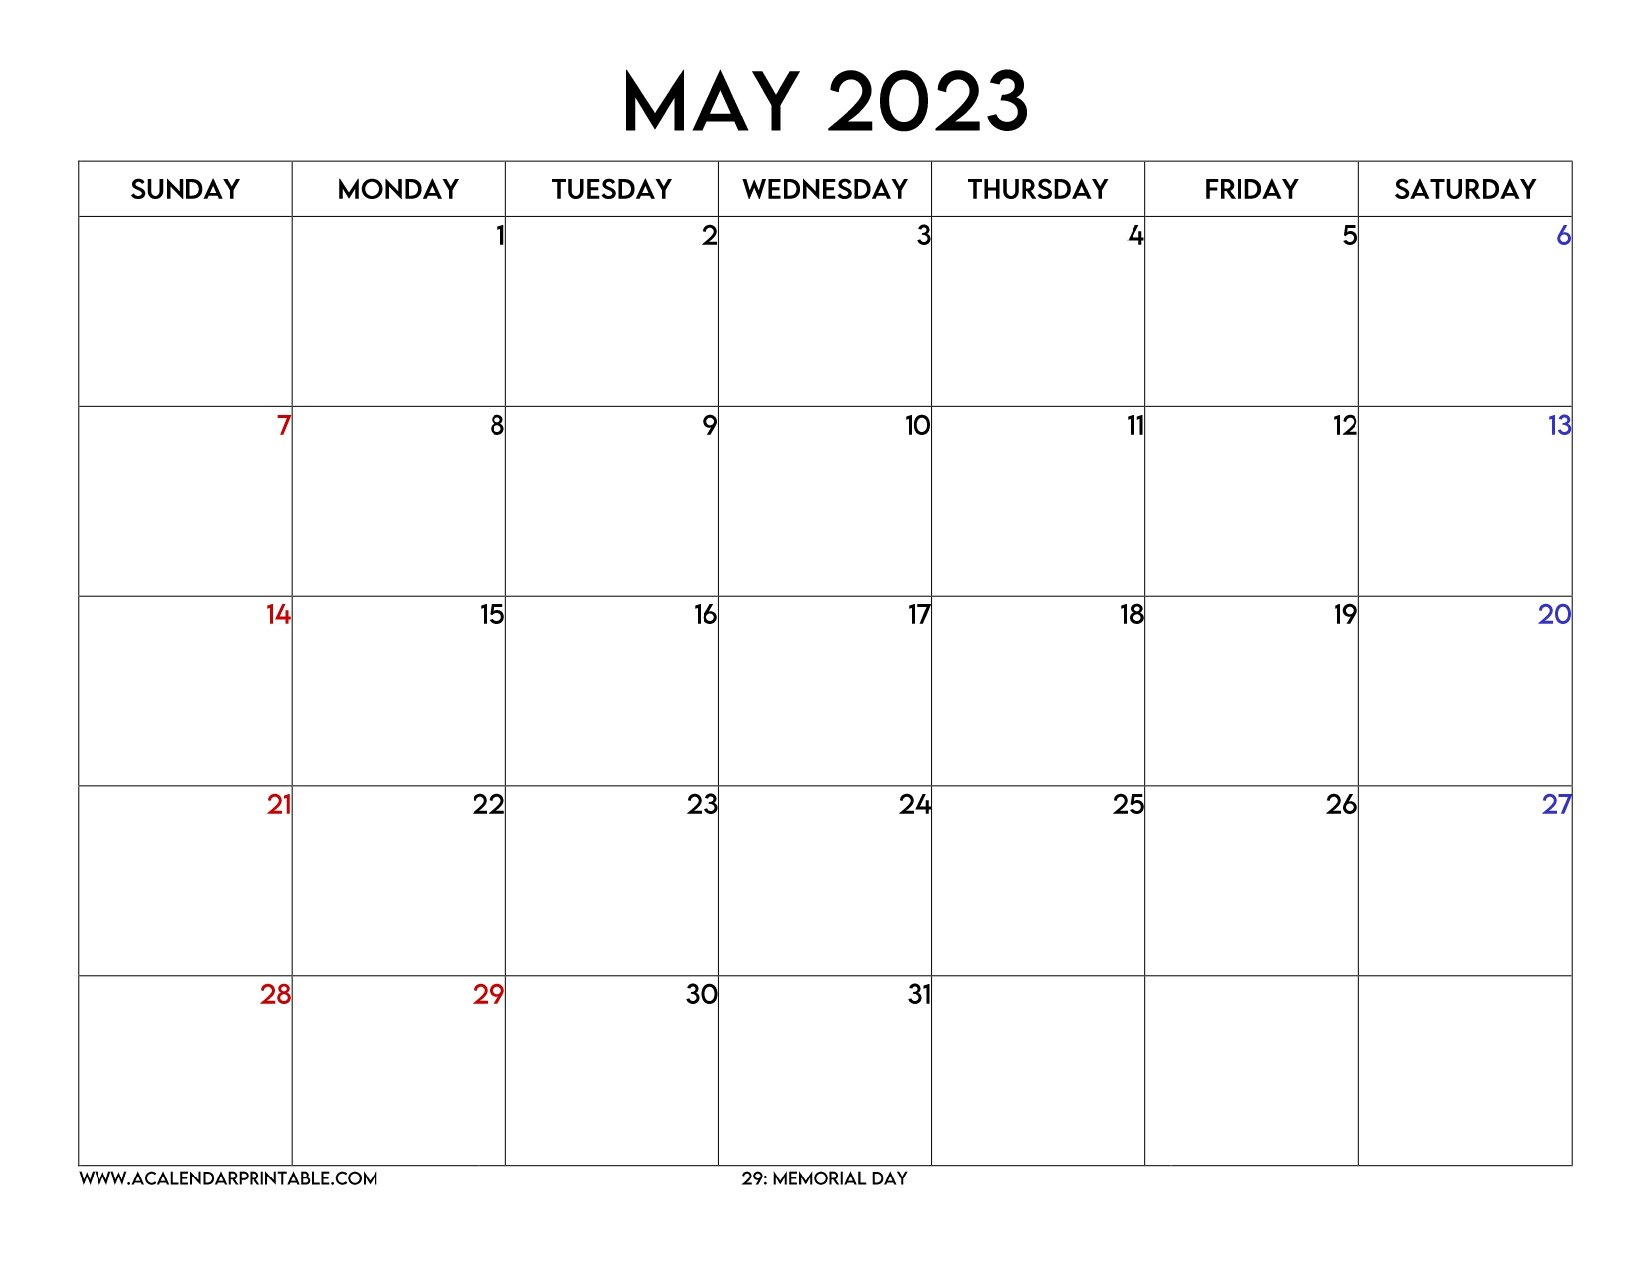 5+ May 2023 Calendar Printable with Holidays, May 2023 Calendar PDF